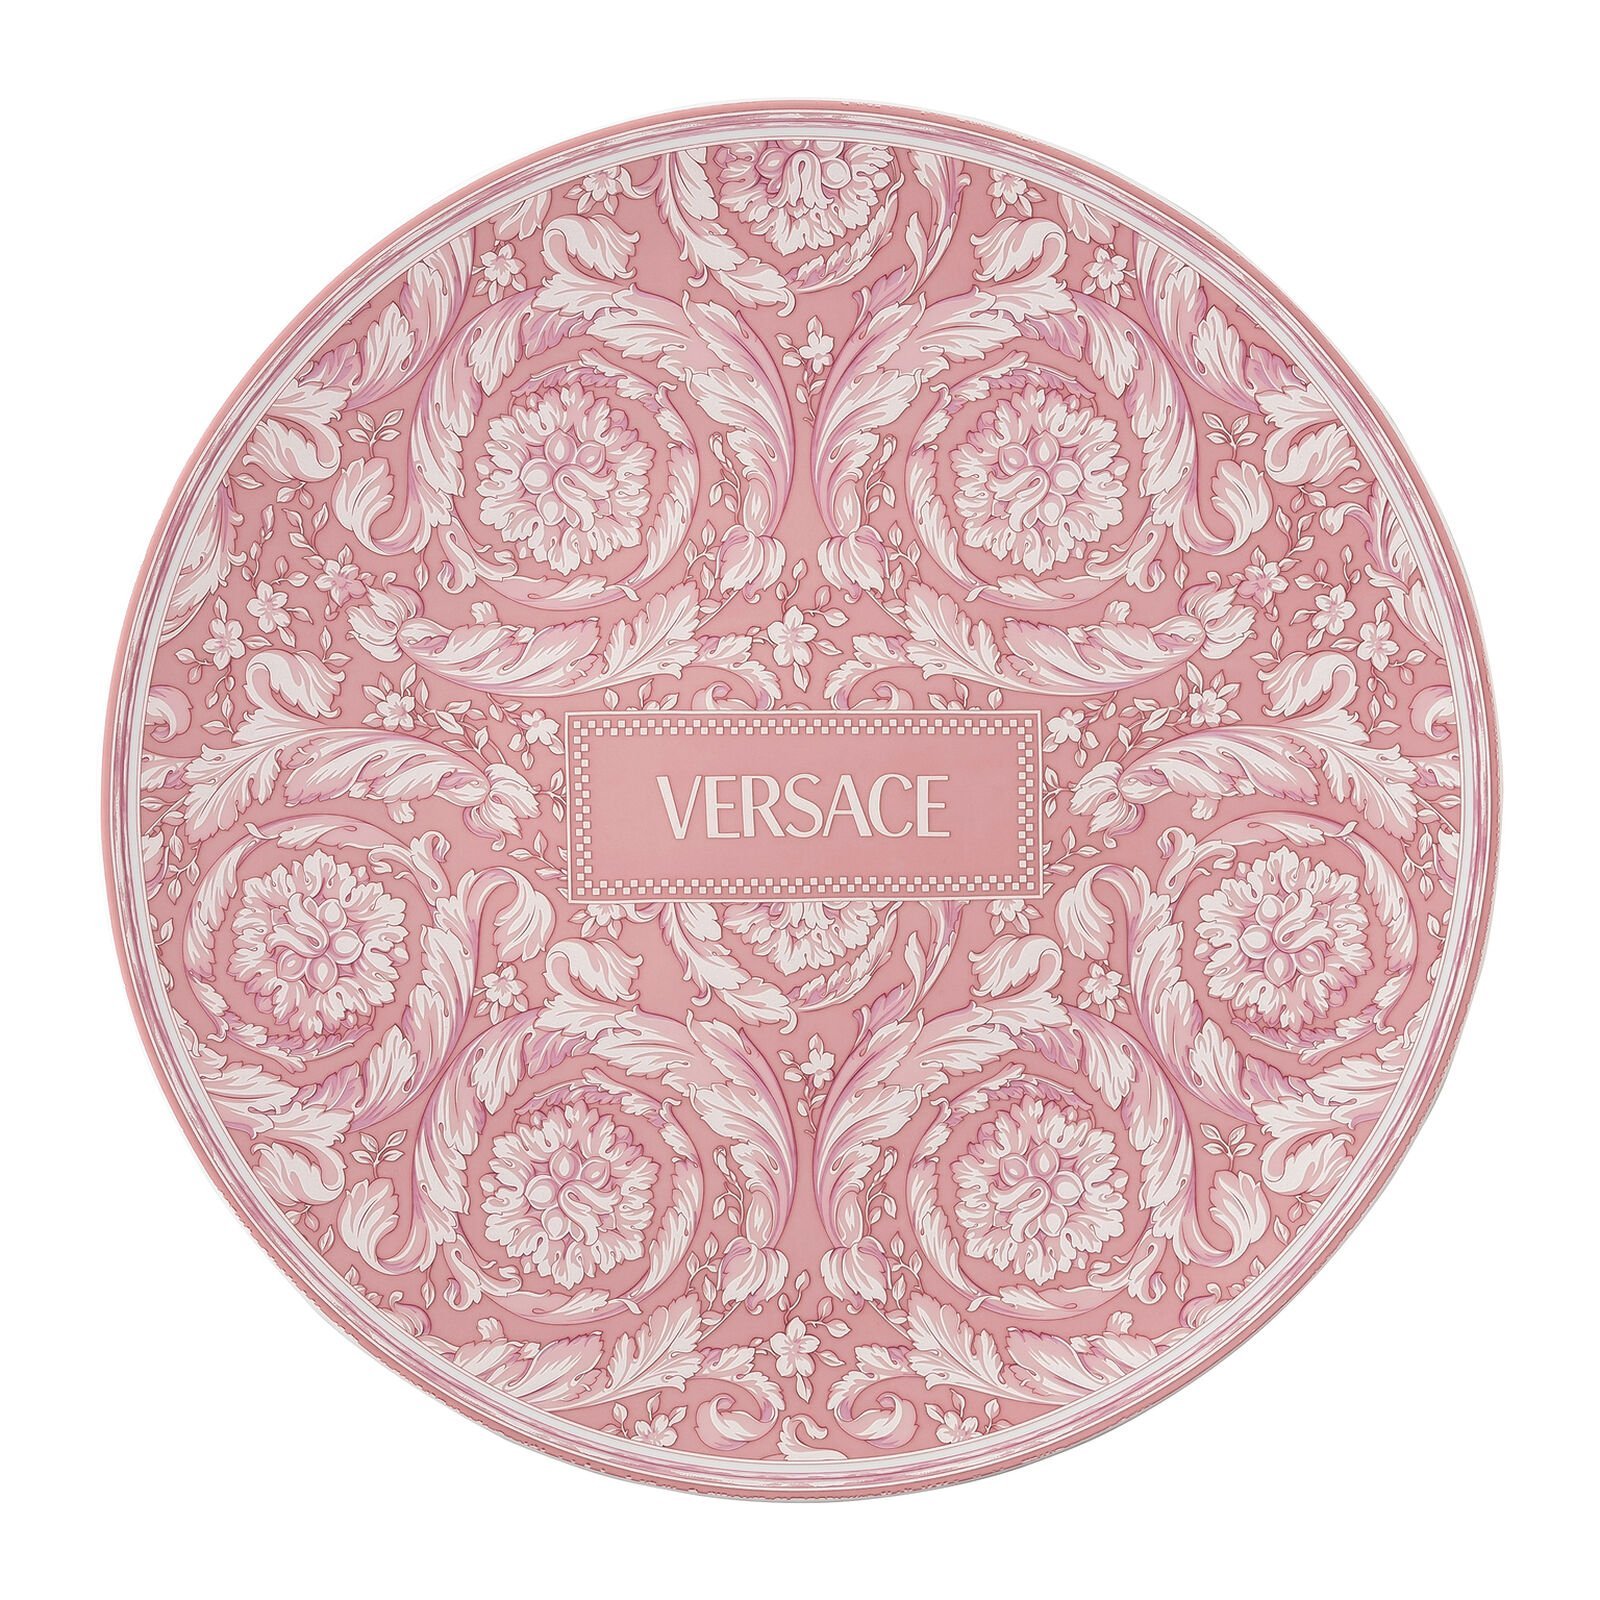 Versace Rosenthal Barocco Barocco Rose service plate